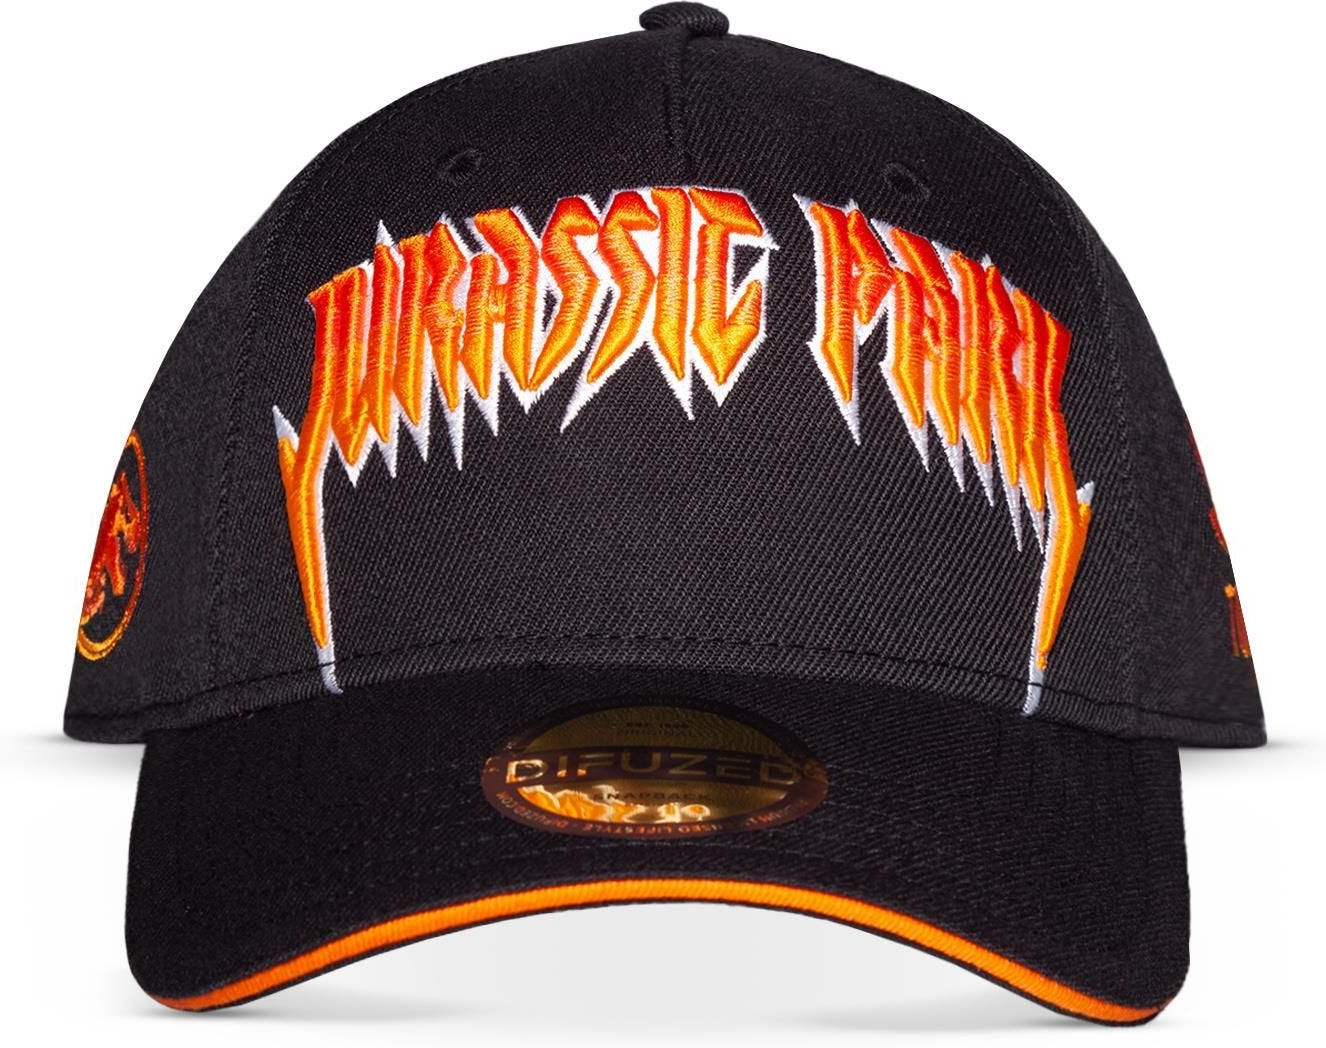 Universal - Jurassic Park Mens Adjustable Cap